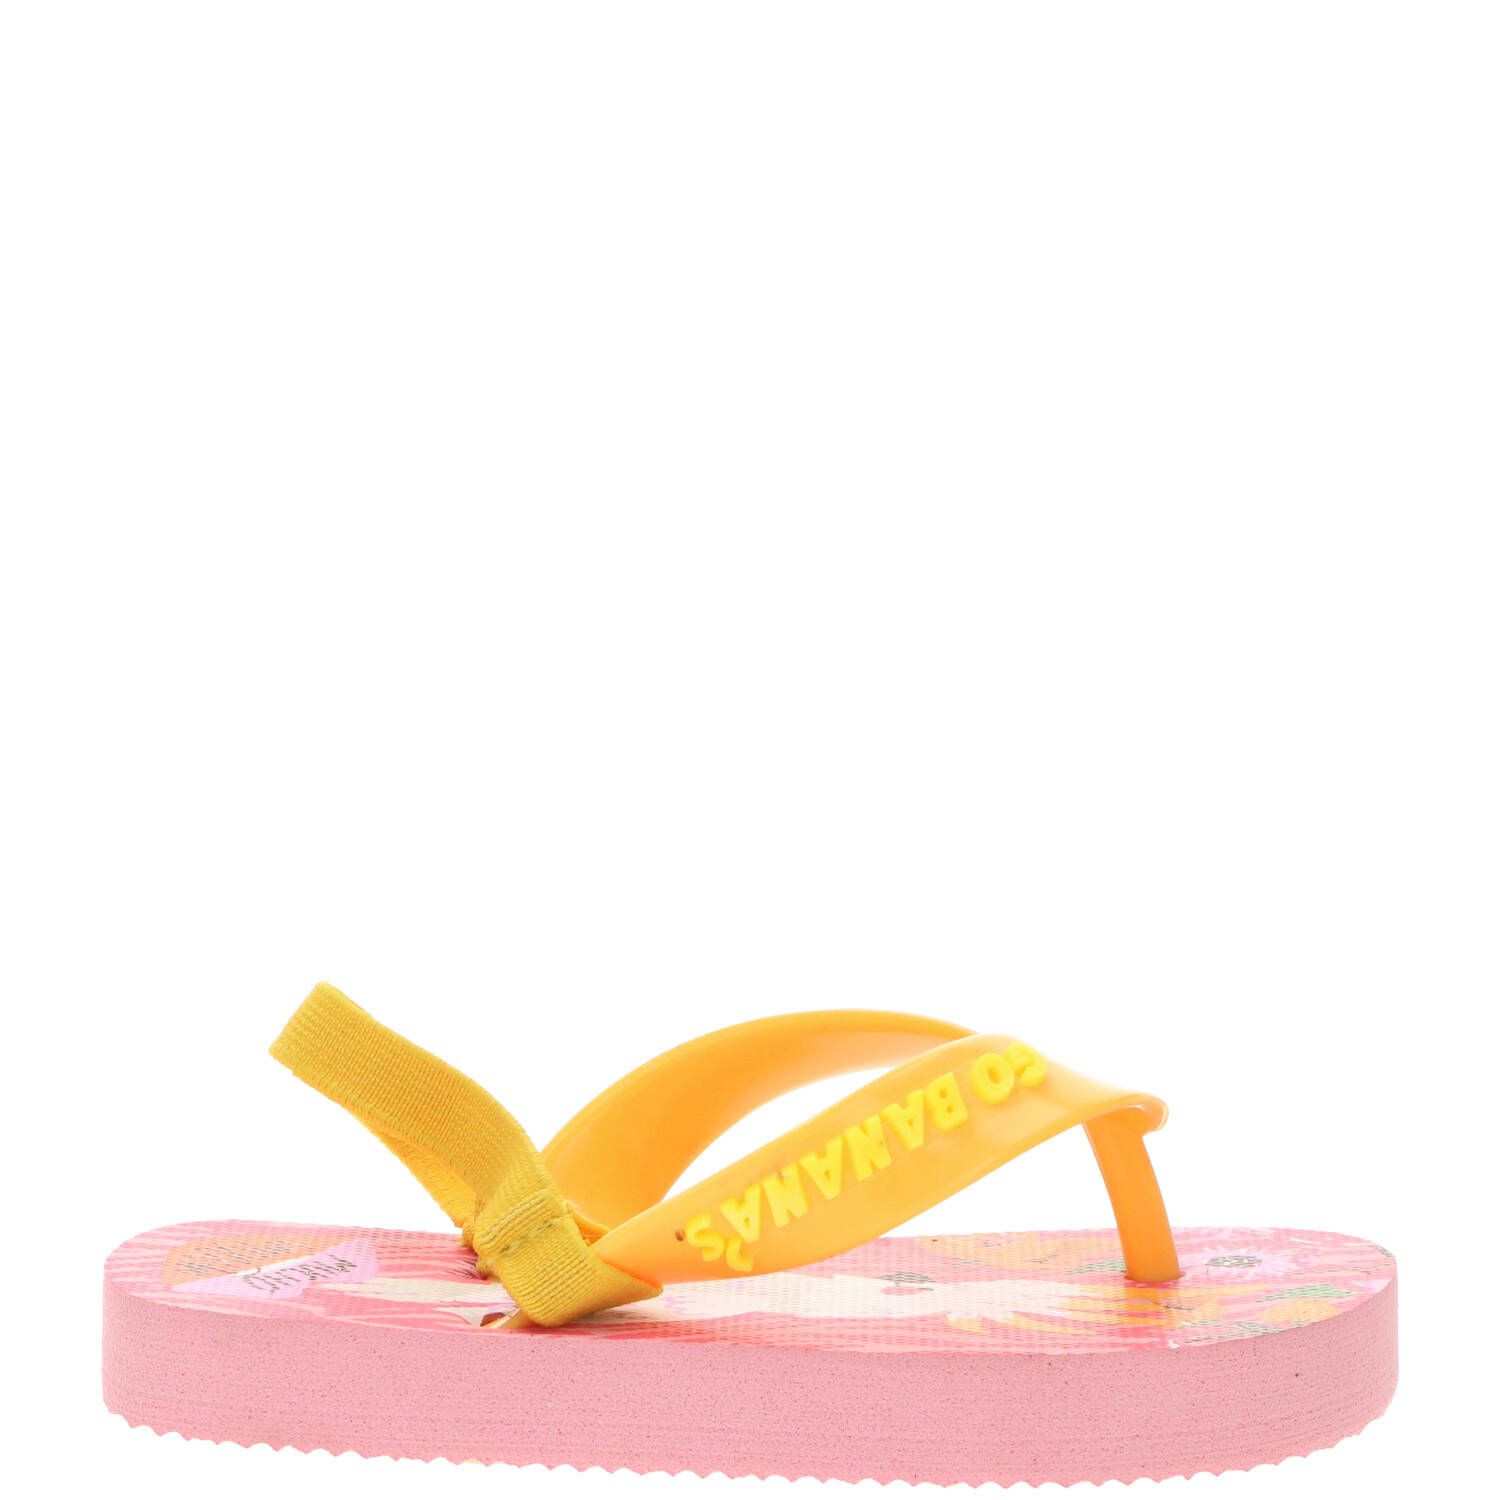 Go Banana's kakatoe slipper, Slippers, Meisje, Maat 29, roze/multi